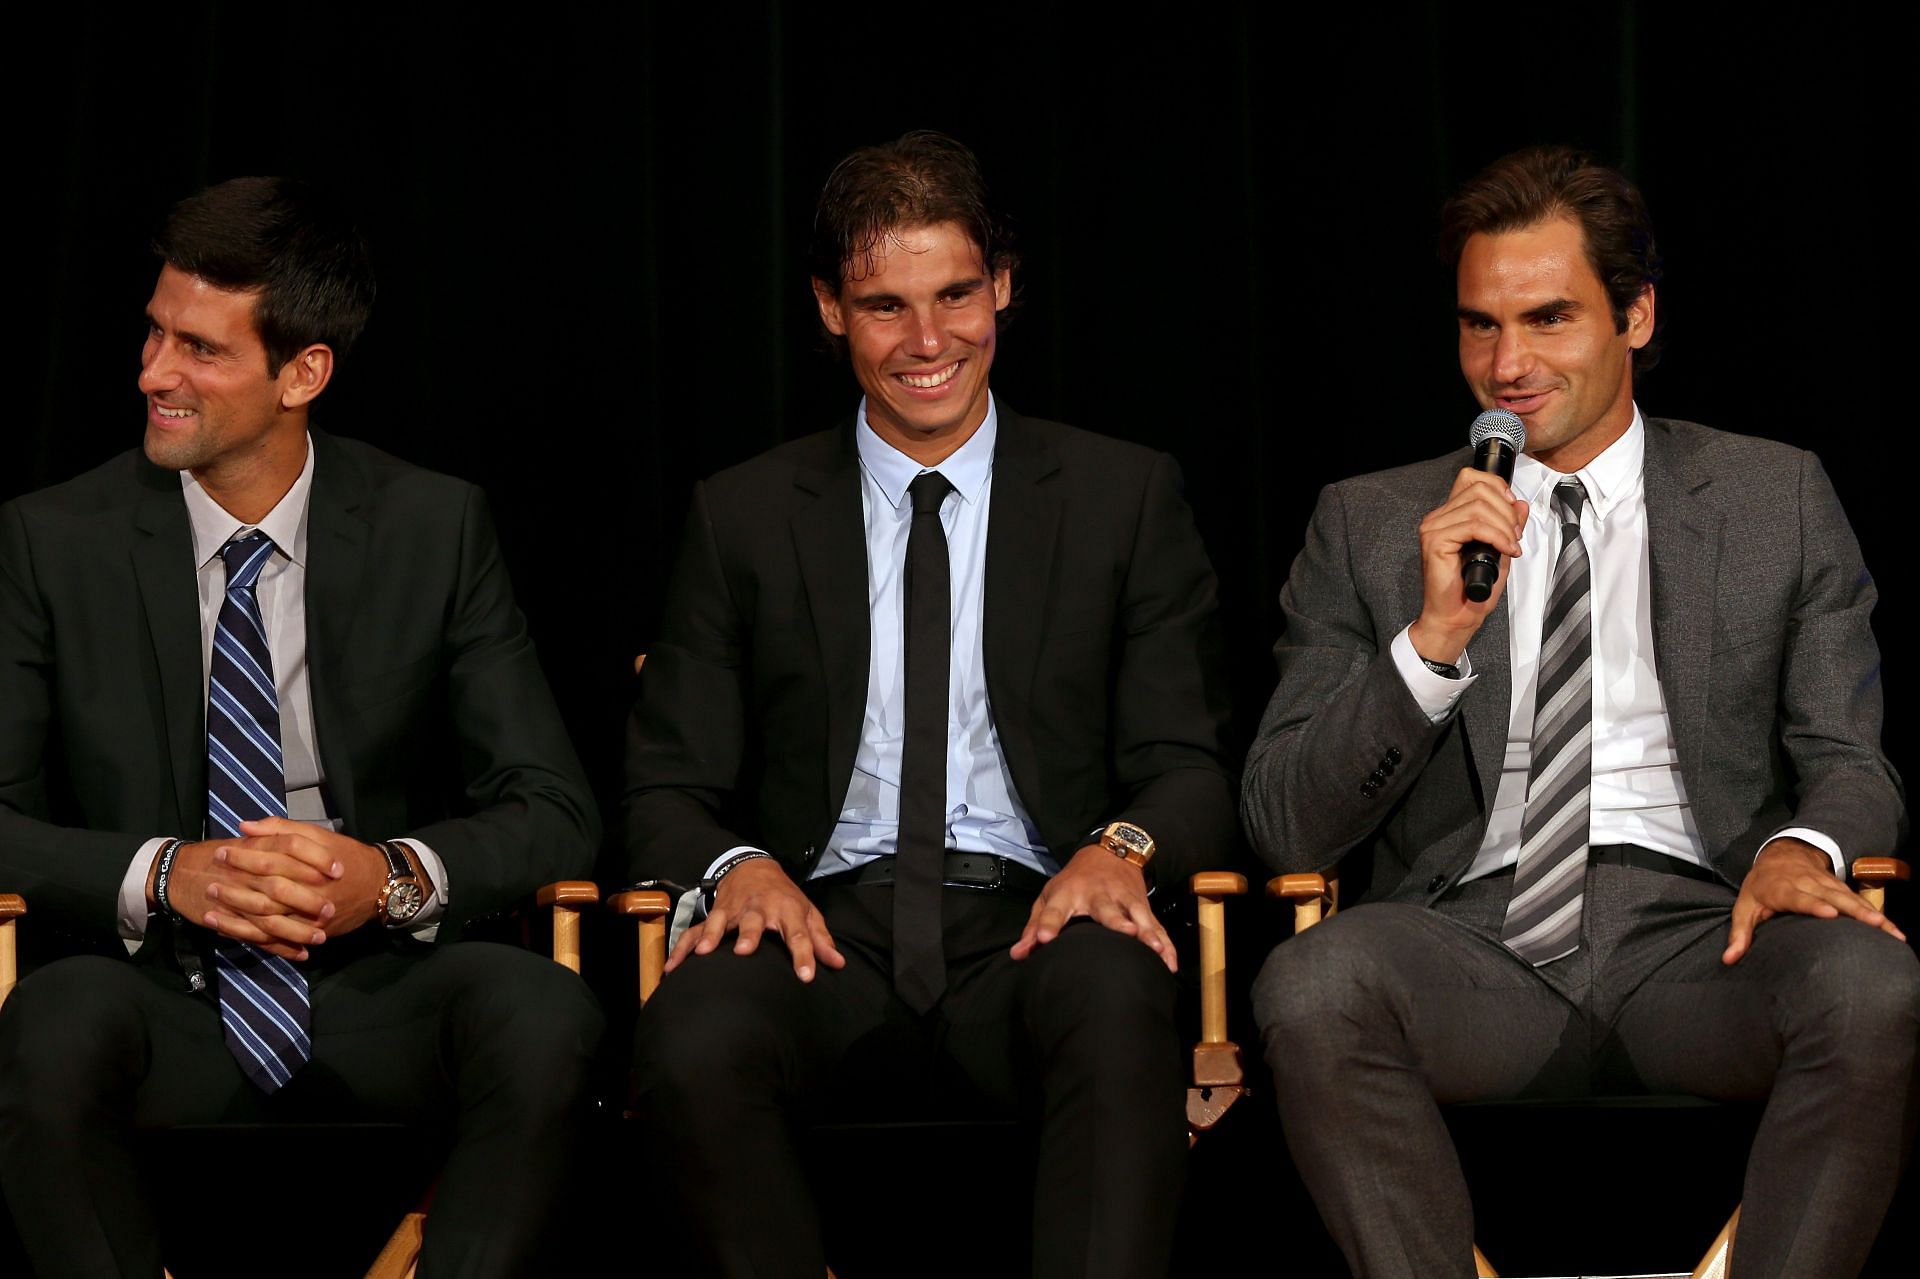 Mats Wilander hoped Djokovic, Nadal and Federer could play at least one more tournamnet together